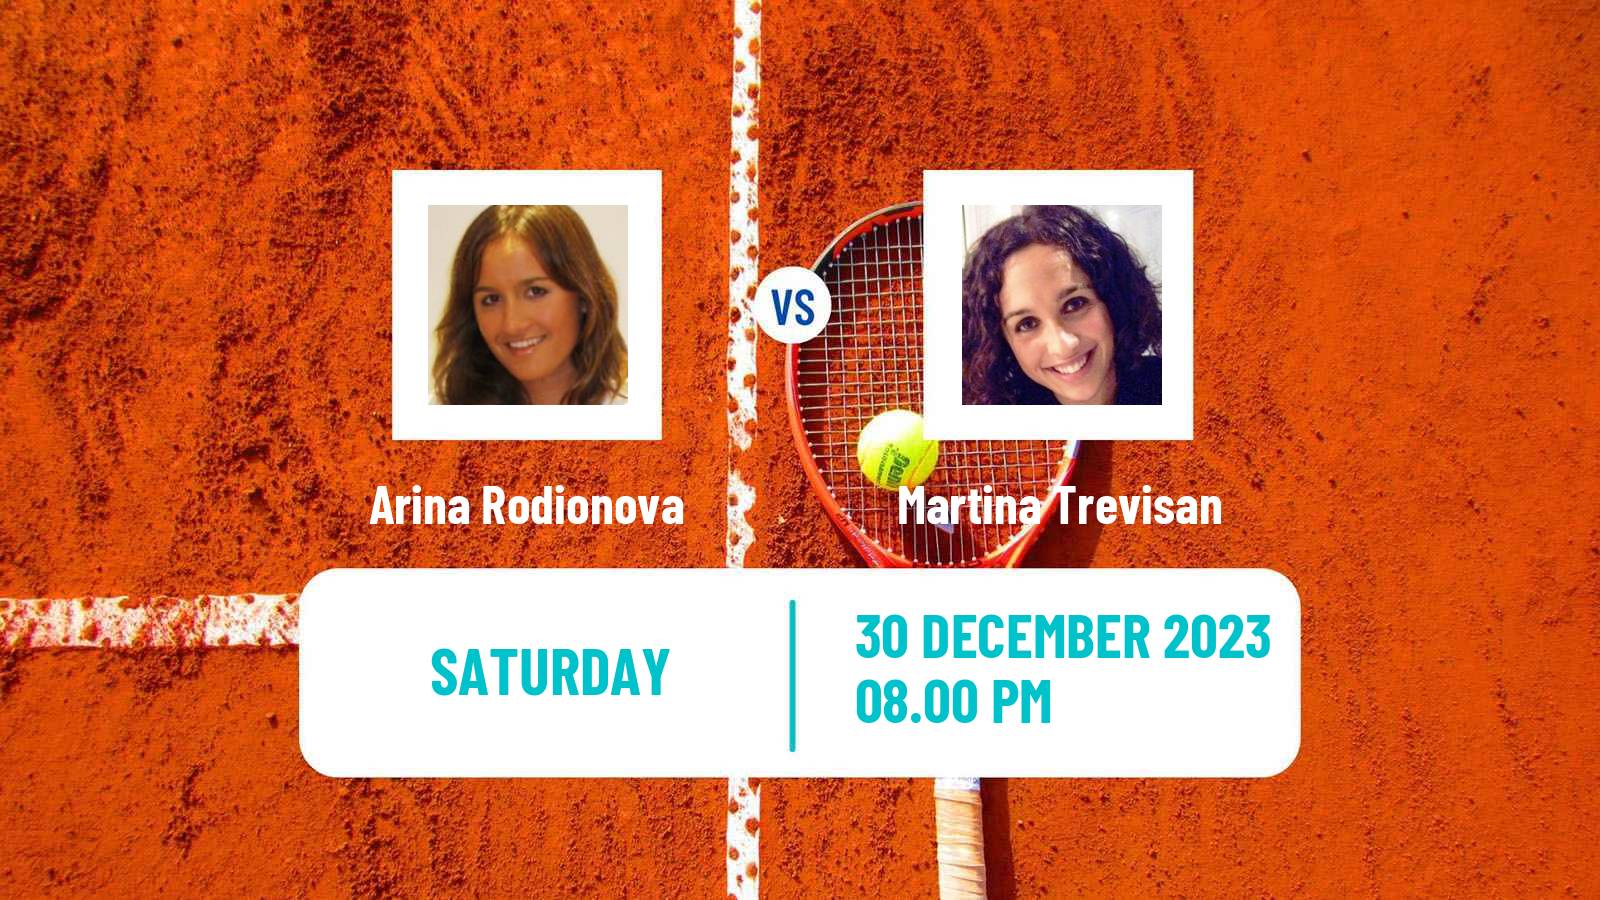 Tennis WTA Brisbane Arina Rodionova - Martina Trevisan